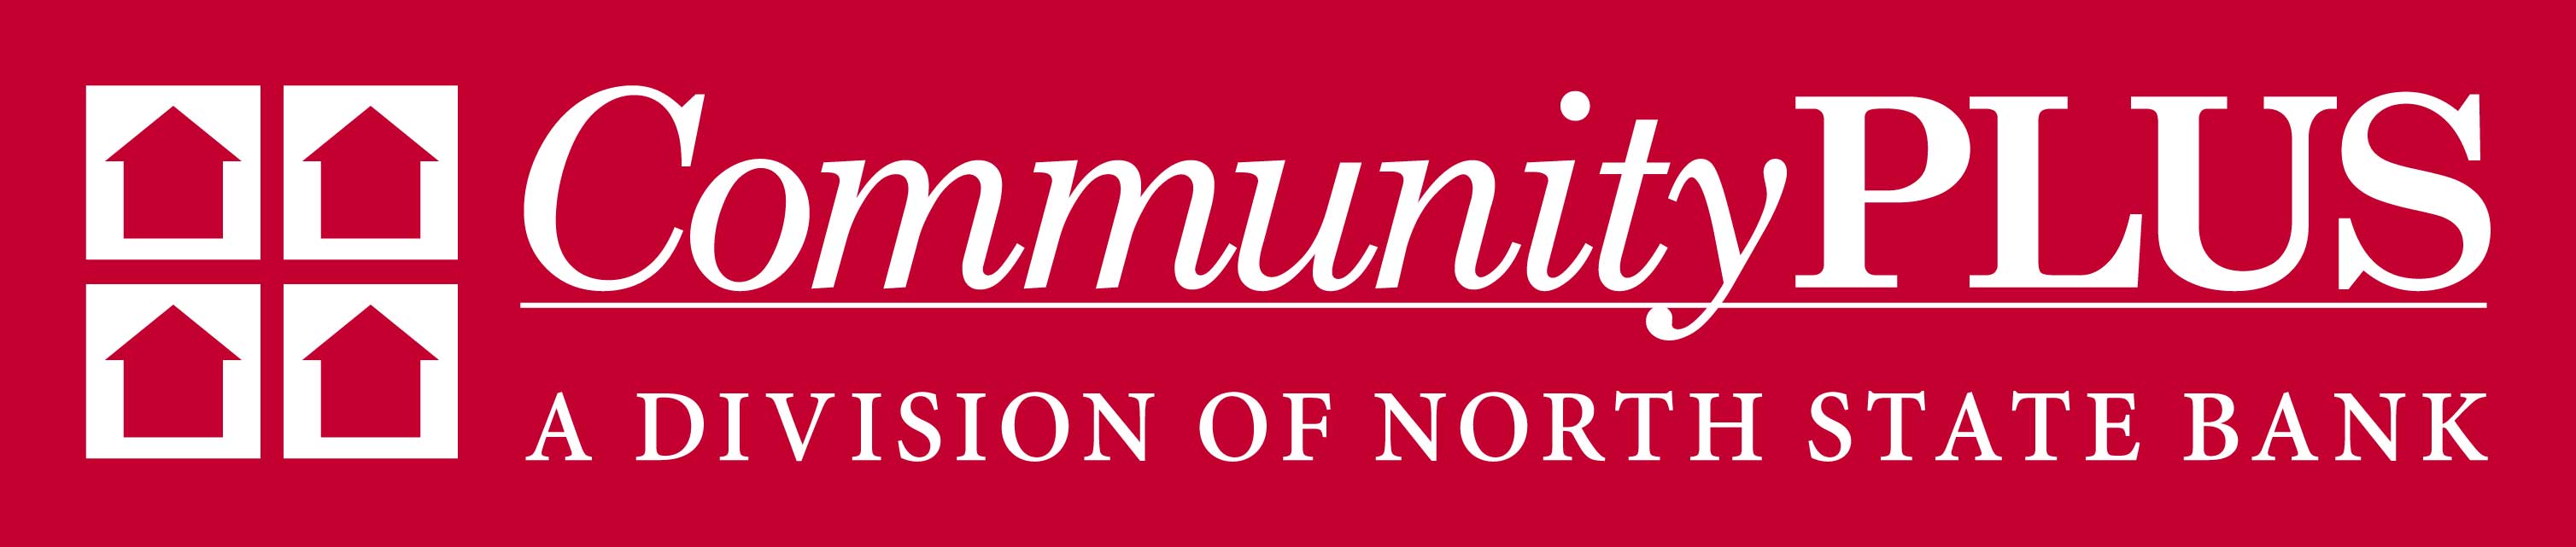 community-plus-logo.png